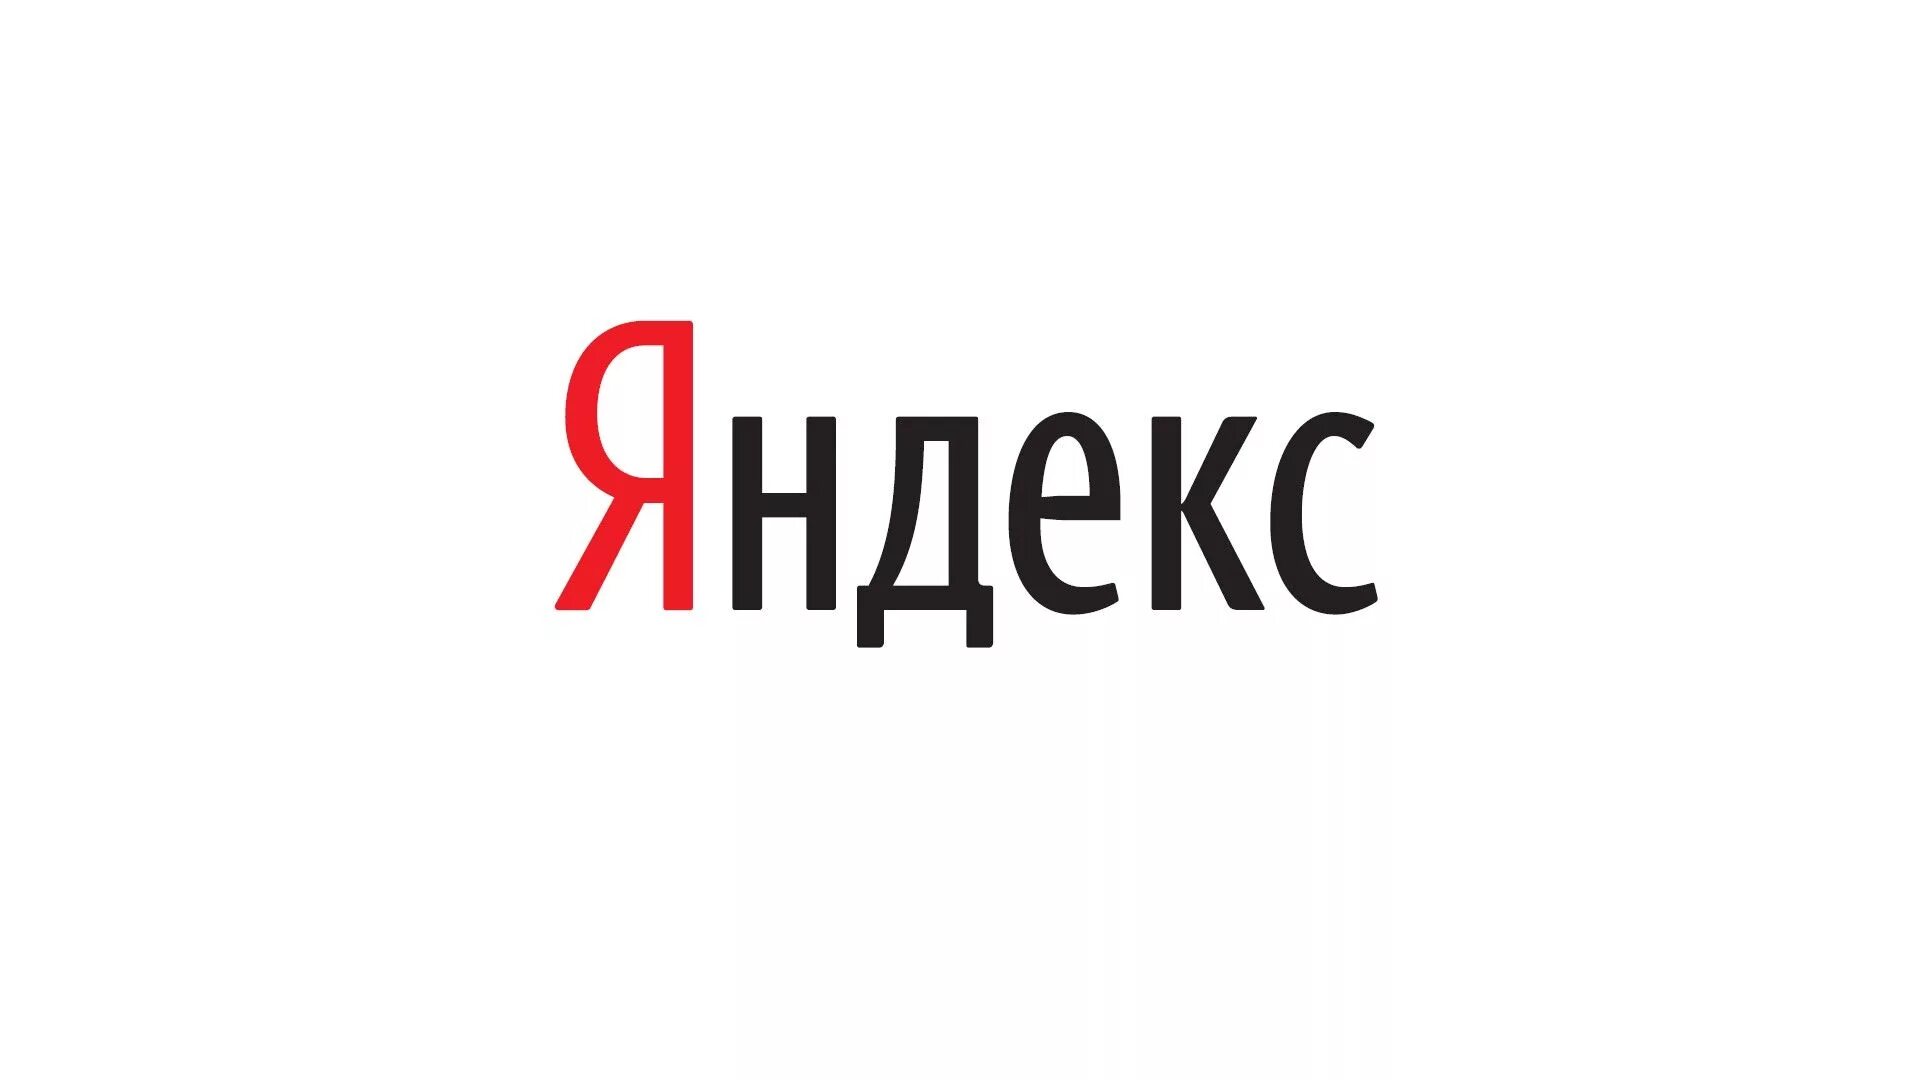 Https ru. Яндекс. Значок Яндекс. Яндекс надпись. Яникс.